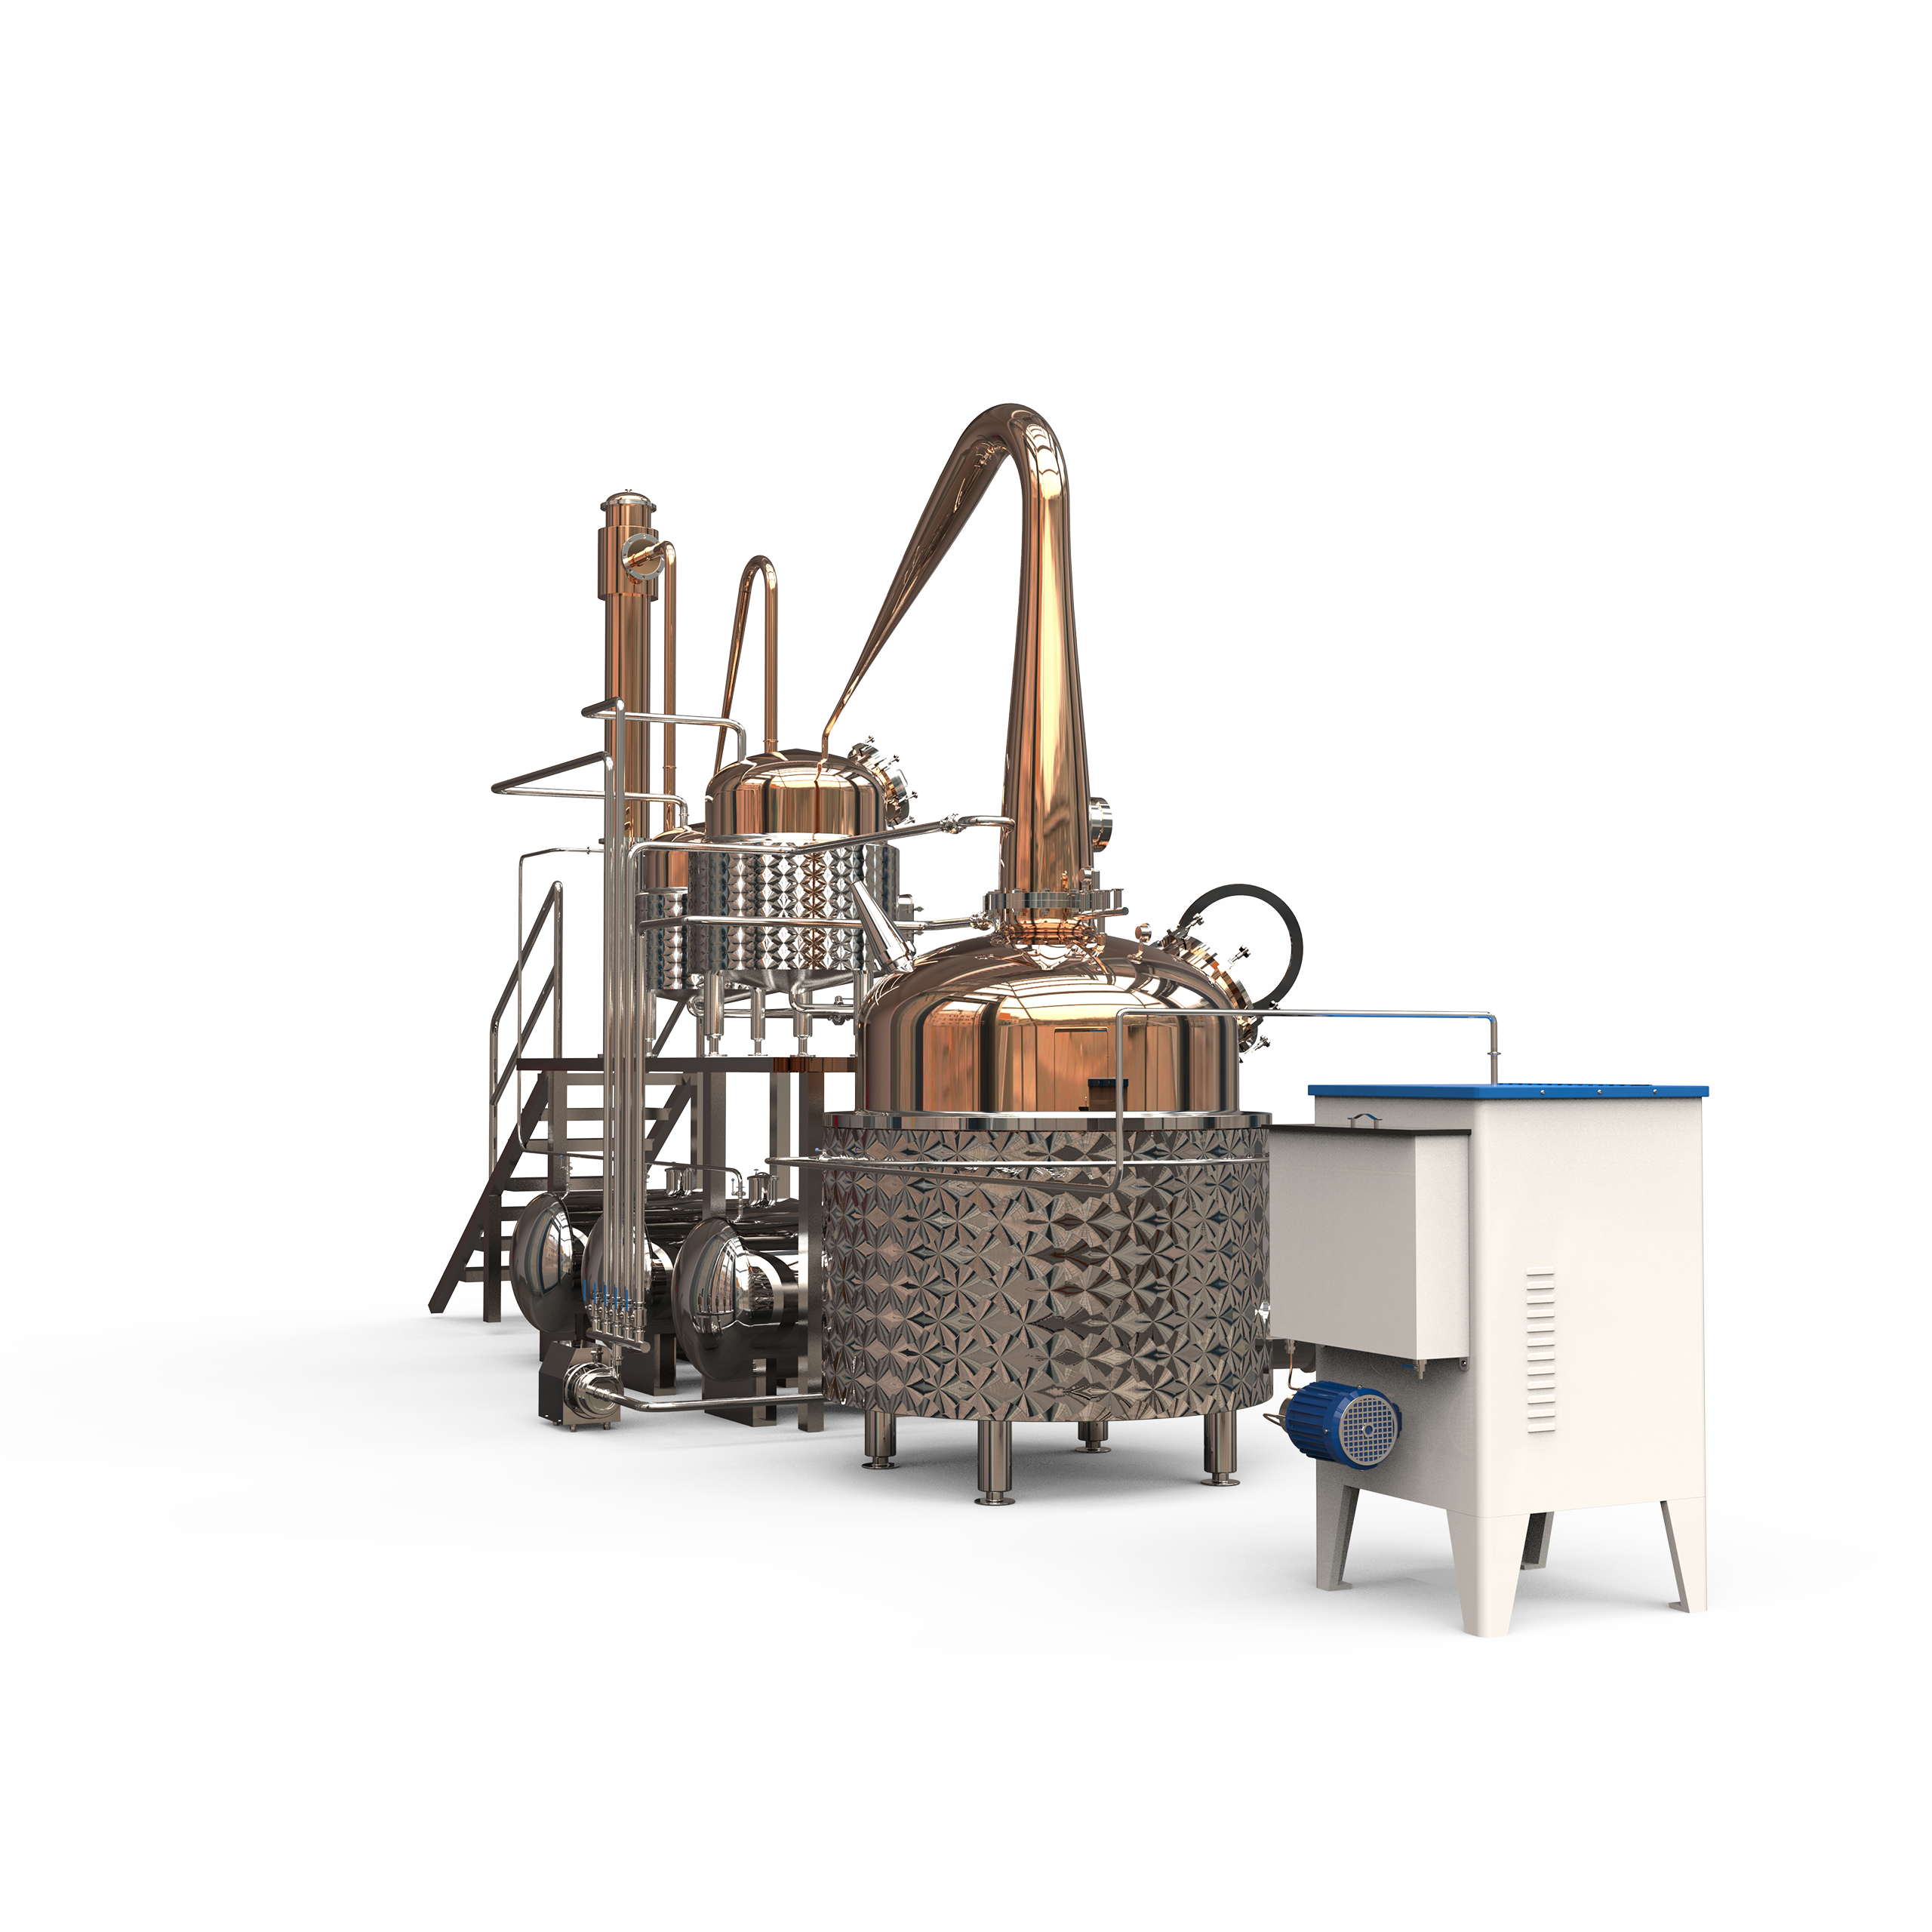 1000L Rum-Destillationssystem 